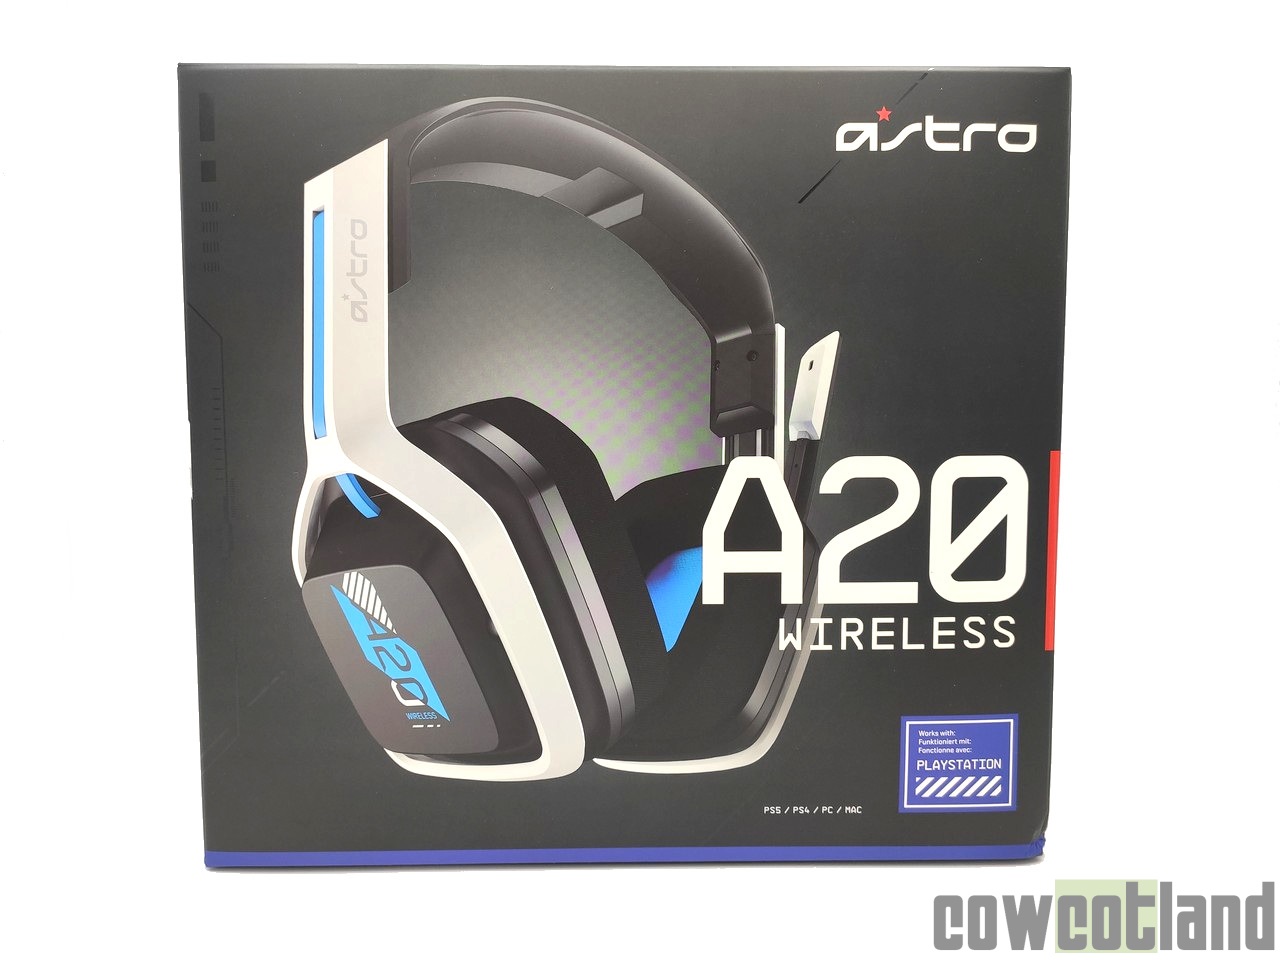 Image 44655, galerie Test casque ASTRO Gaming A20 Wireless, un bon rapport qualit / prix !